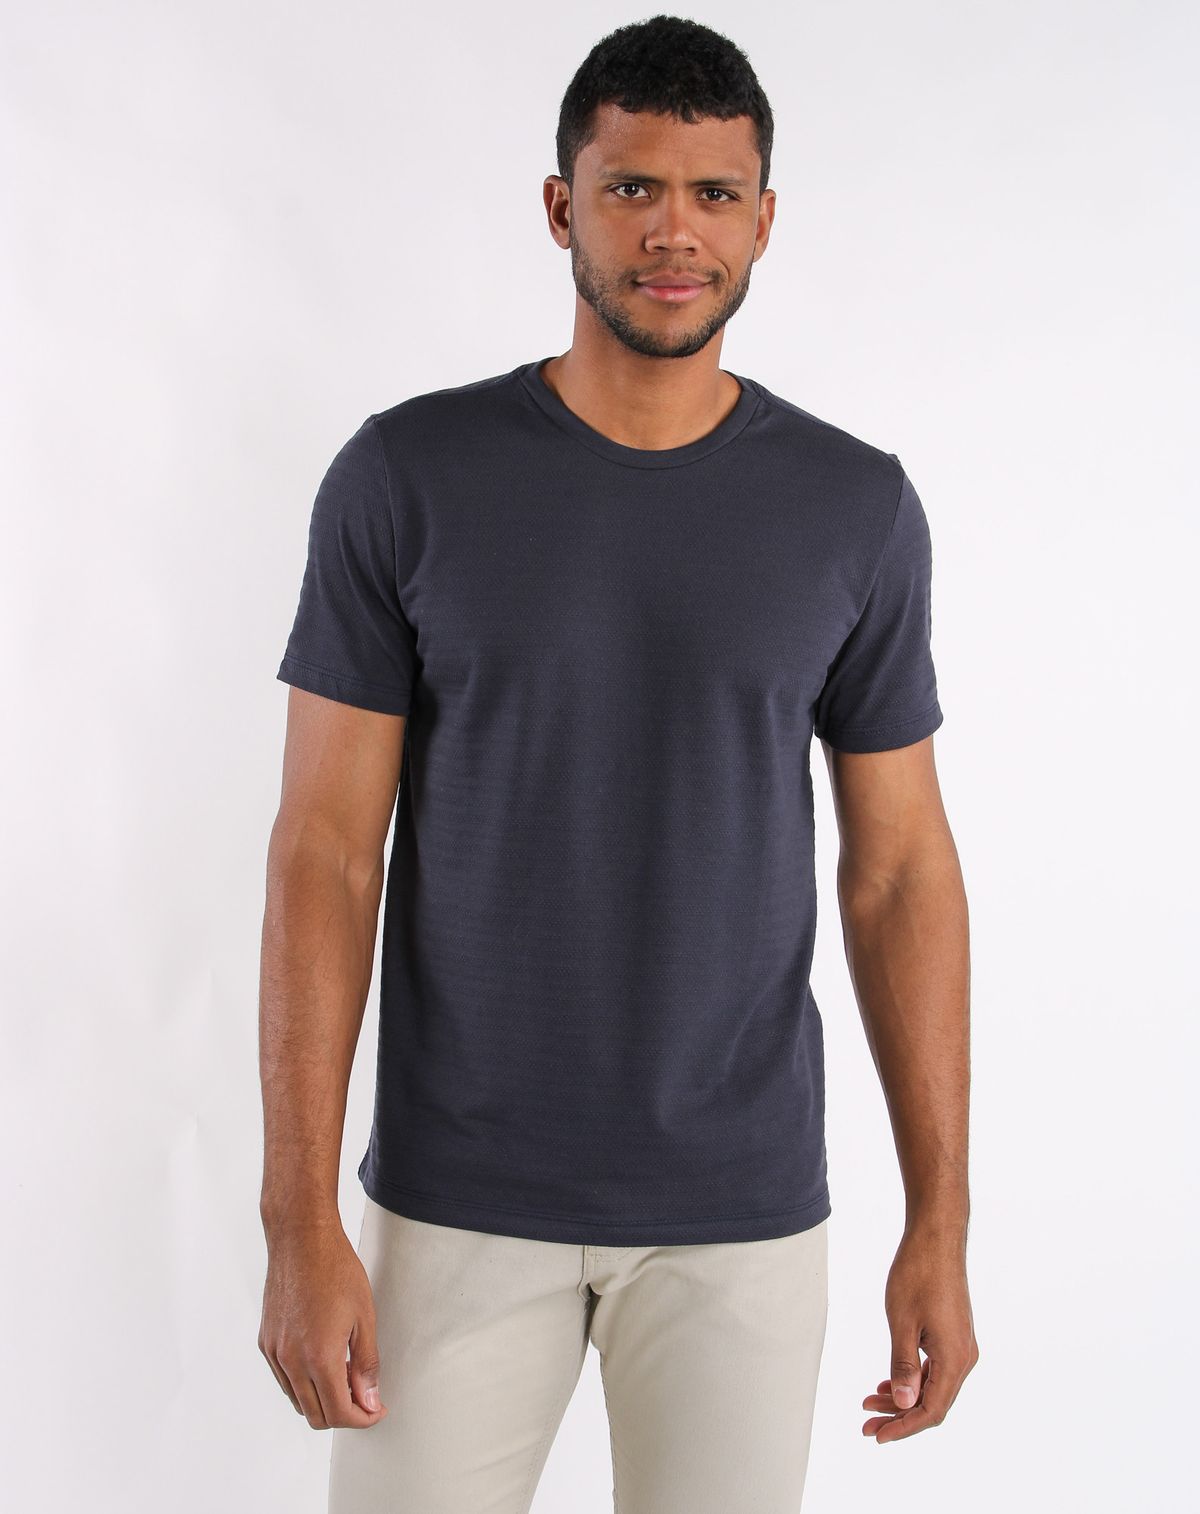 663091009-camiseta-manga-curta-basica-masculina-textura-marinho-p-a4f